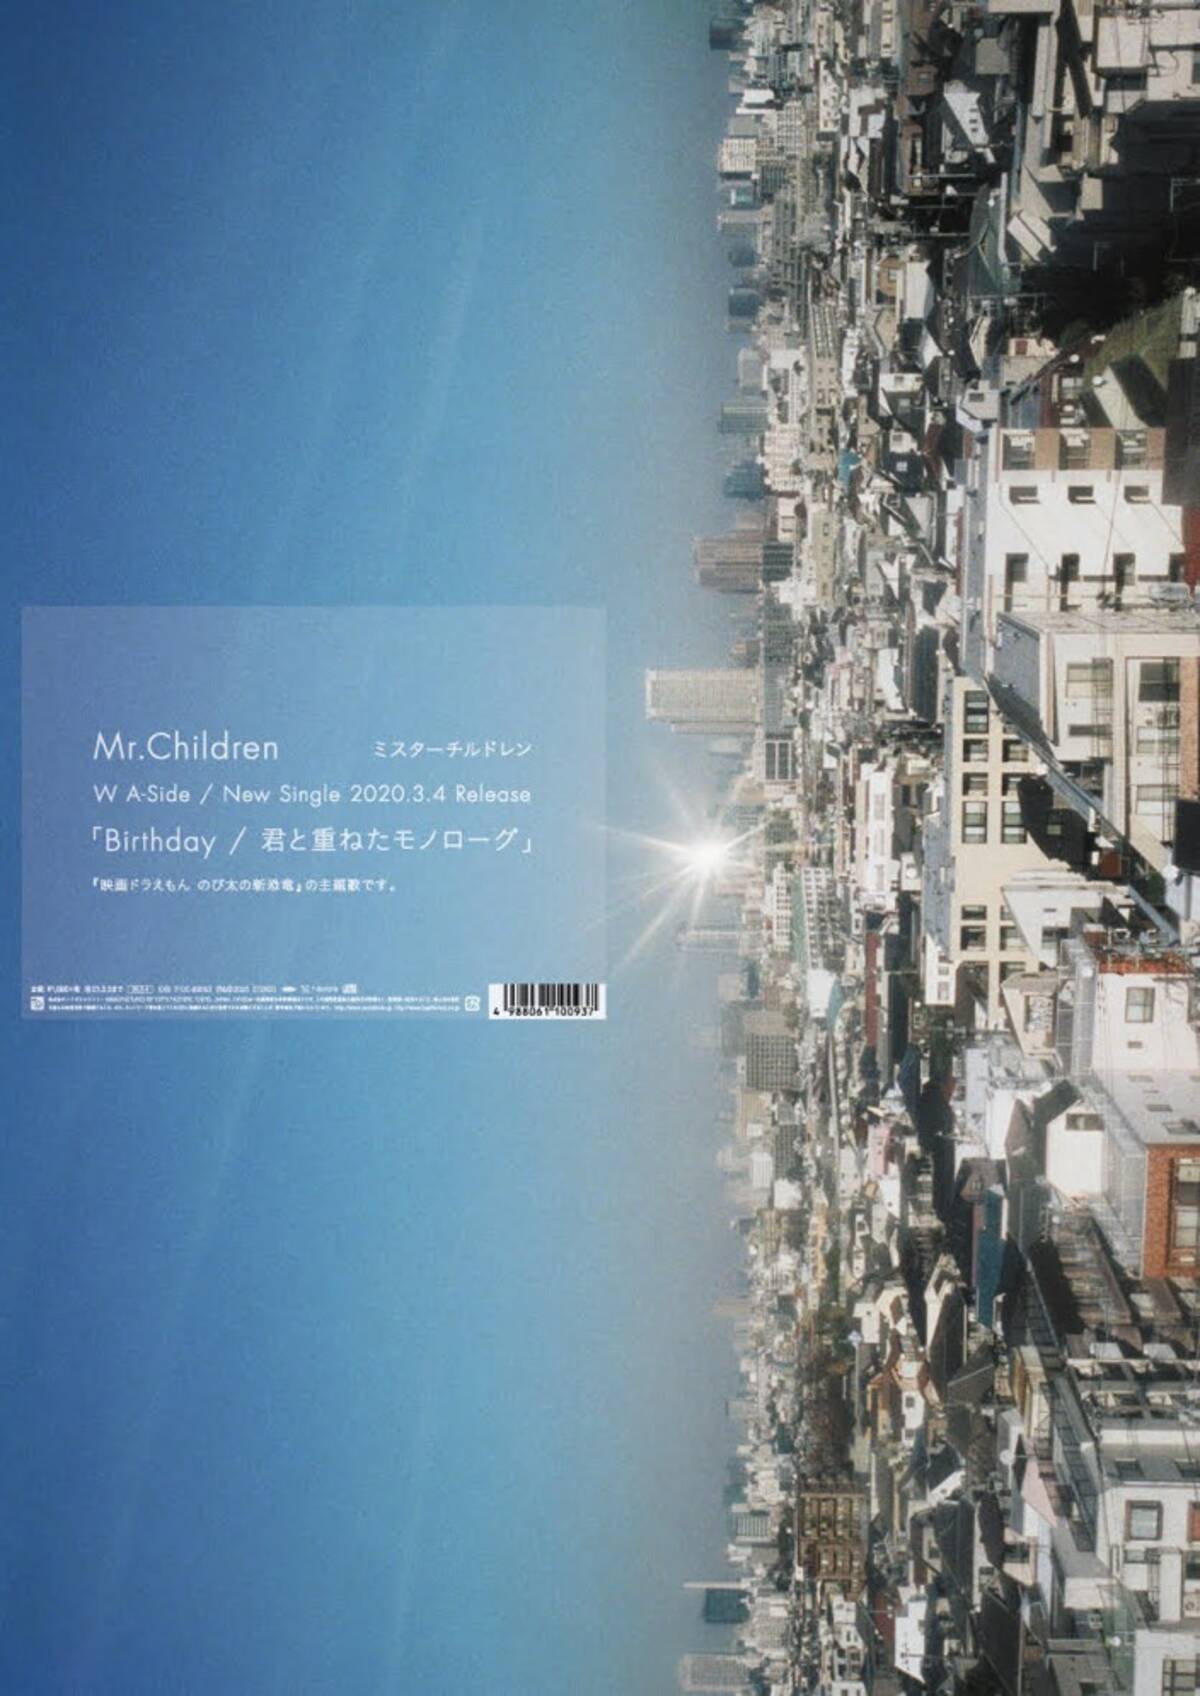 Mr Children 映画ドラえもん 史上初の W主題歌 シングルのジャケット ポスター公開 年2月14日 エキサイトニュース